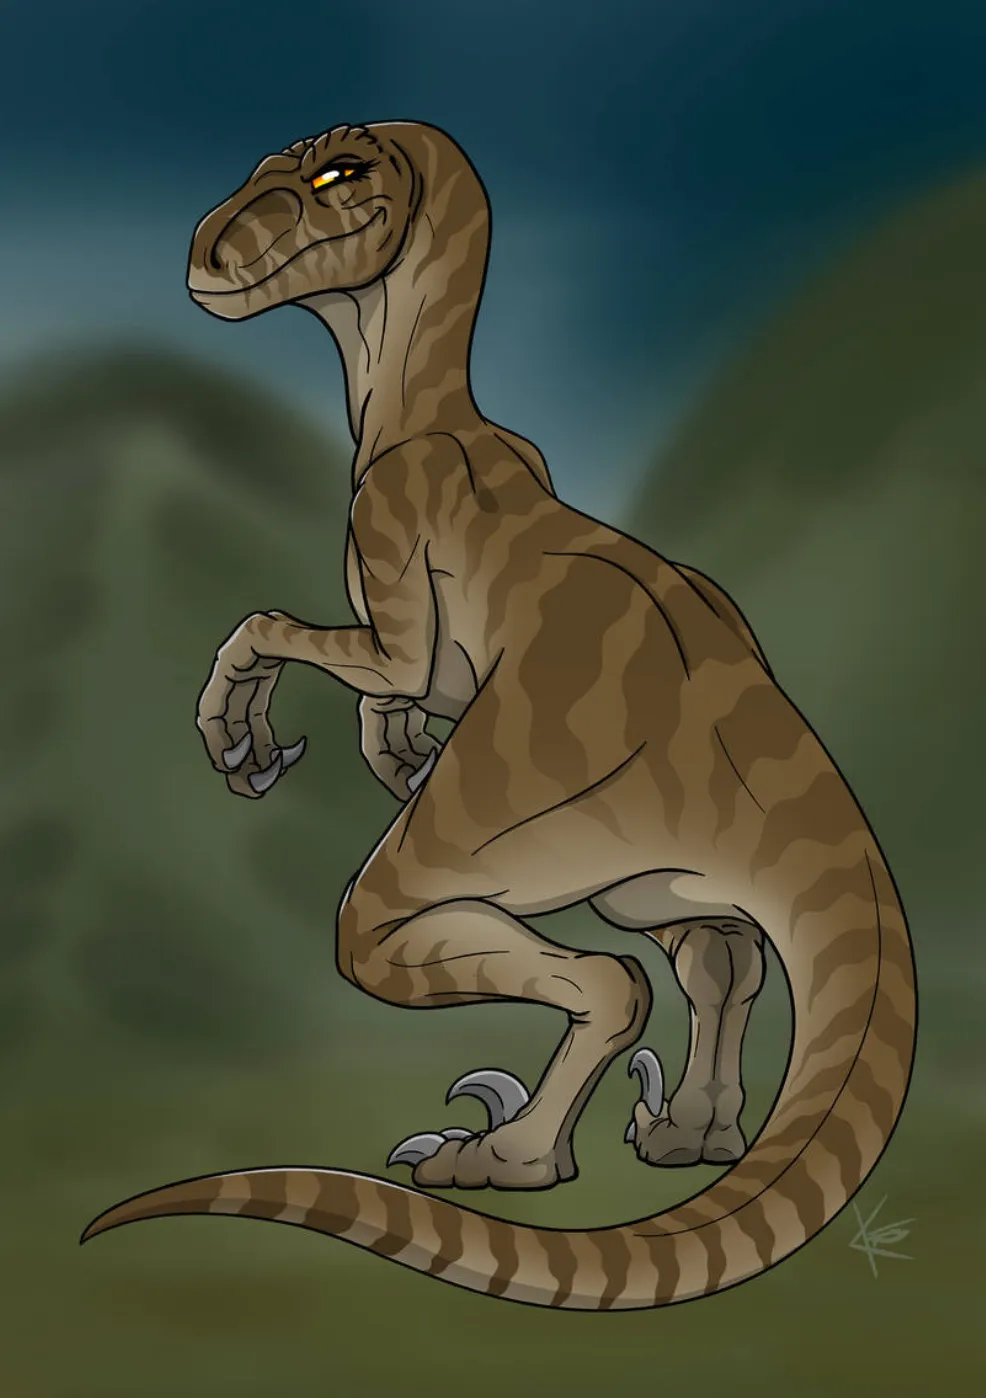 Avatar of Velociraptor